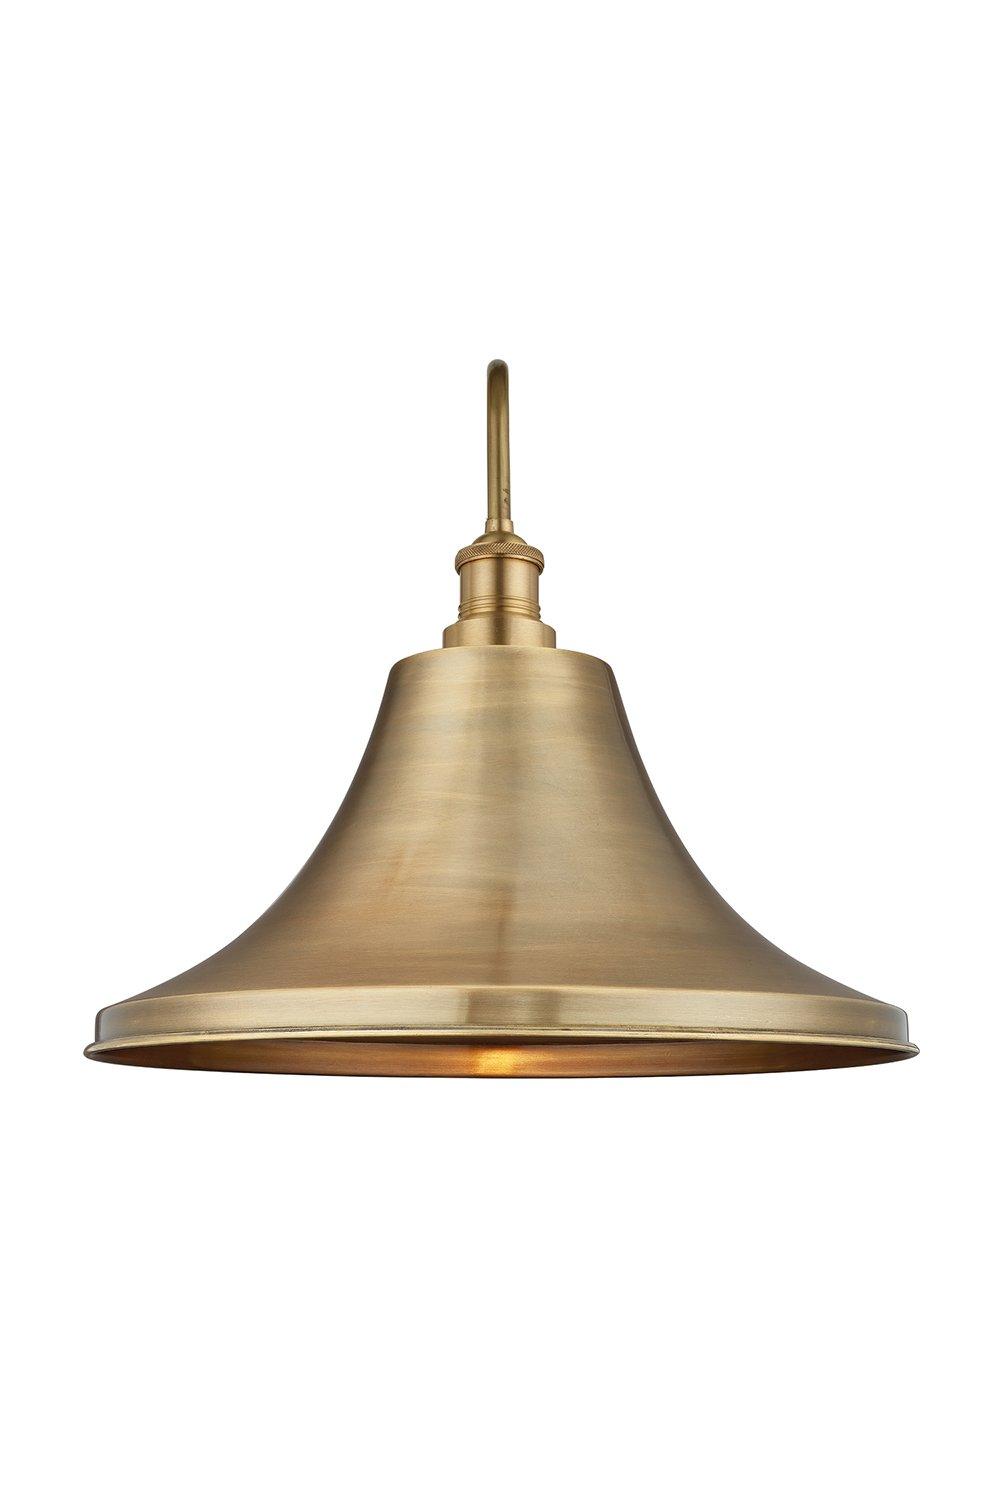 Swan Neck Outdoor & Bathroom Giant Bell Wall Light, 20 Inch, Brass, Brass Holder, Globe Glass